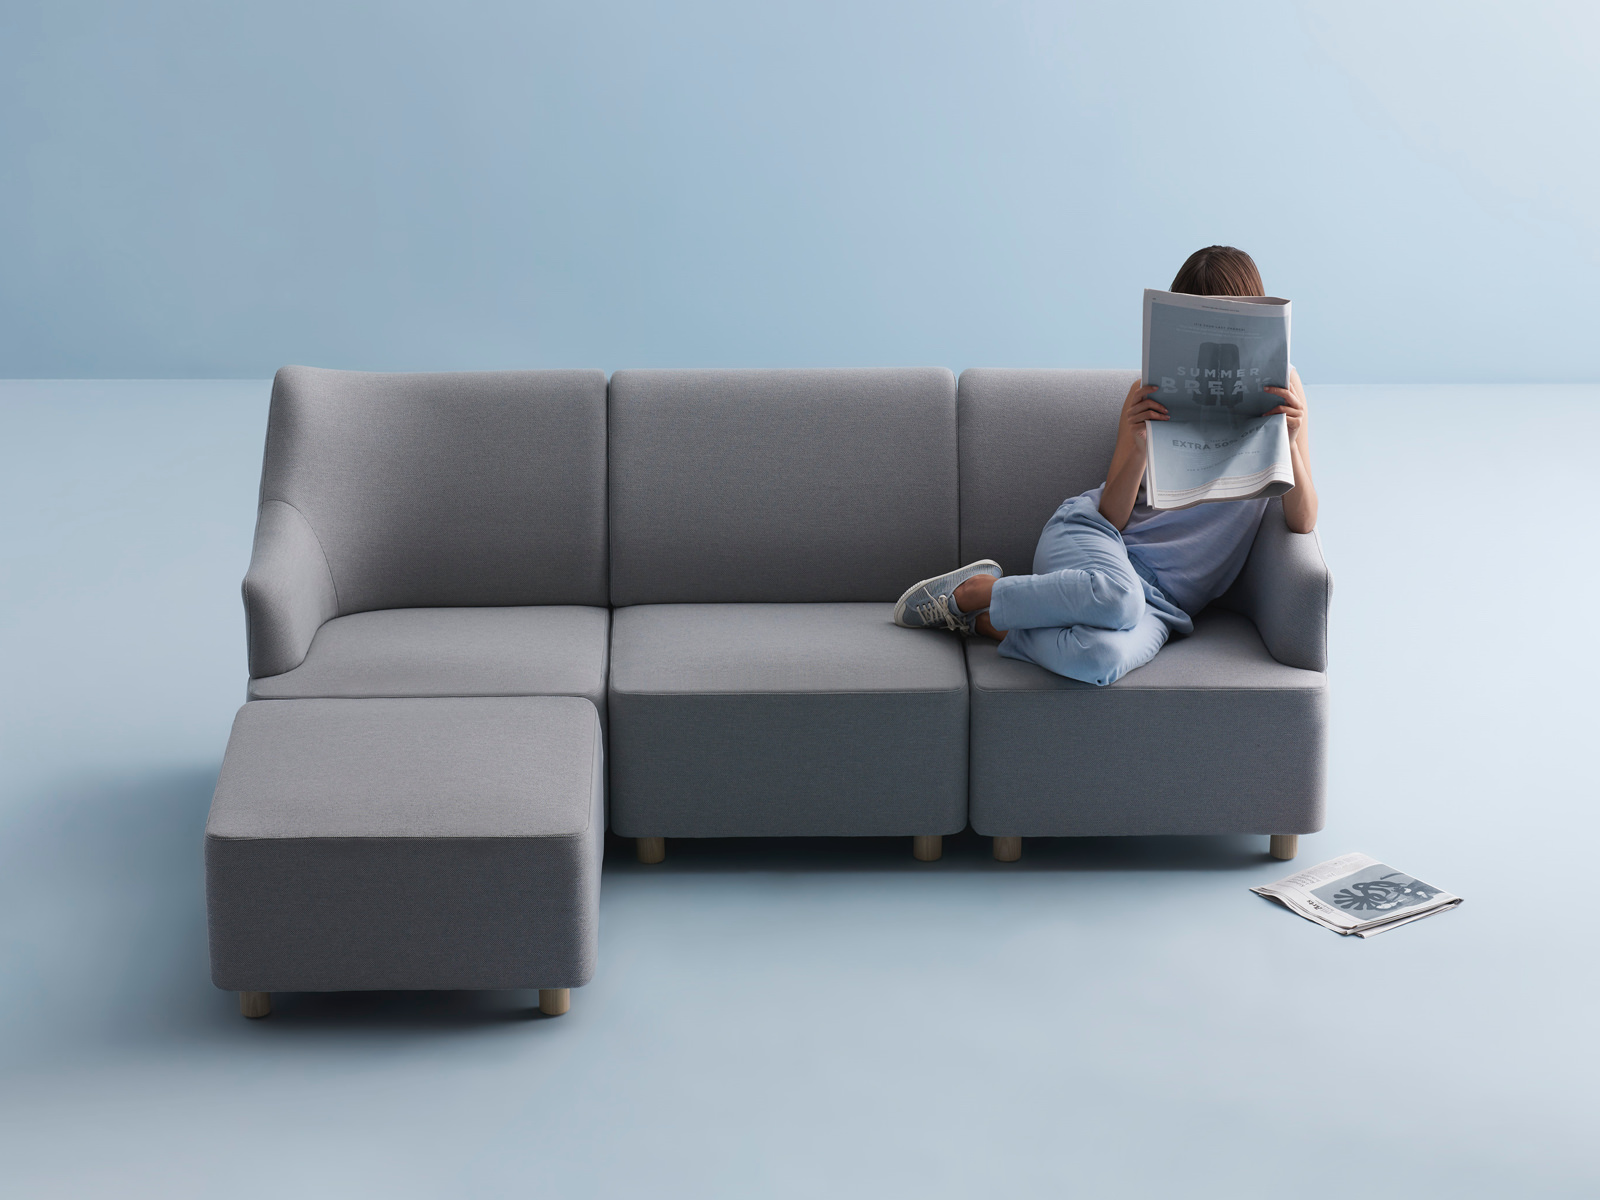 Mujer leyendo un periódico en gris, modular Plex Lounge Furniture.